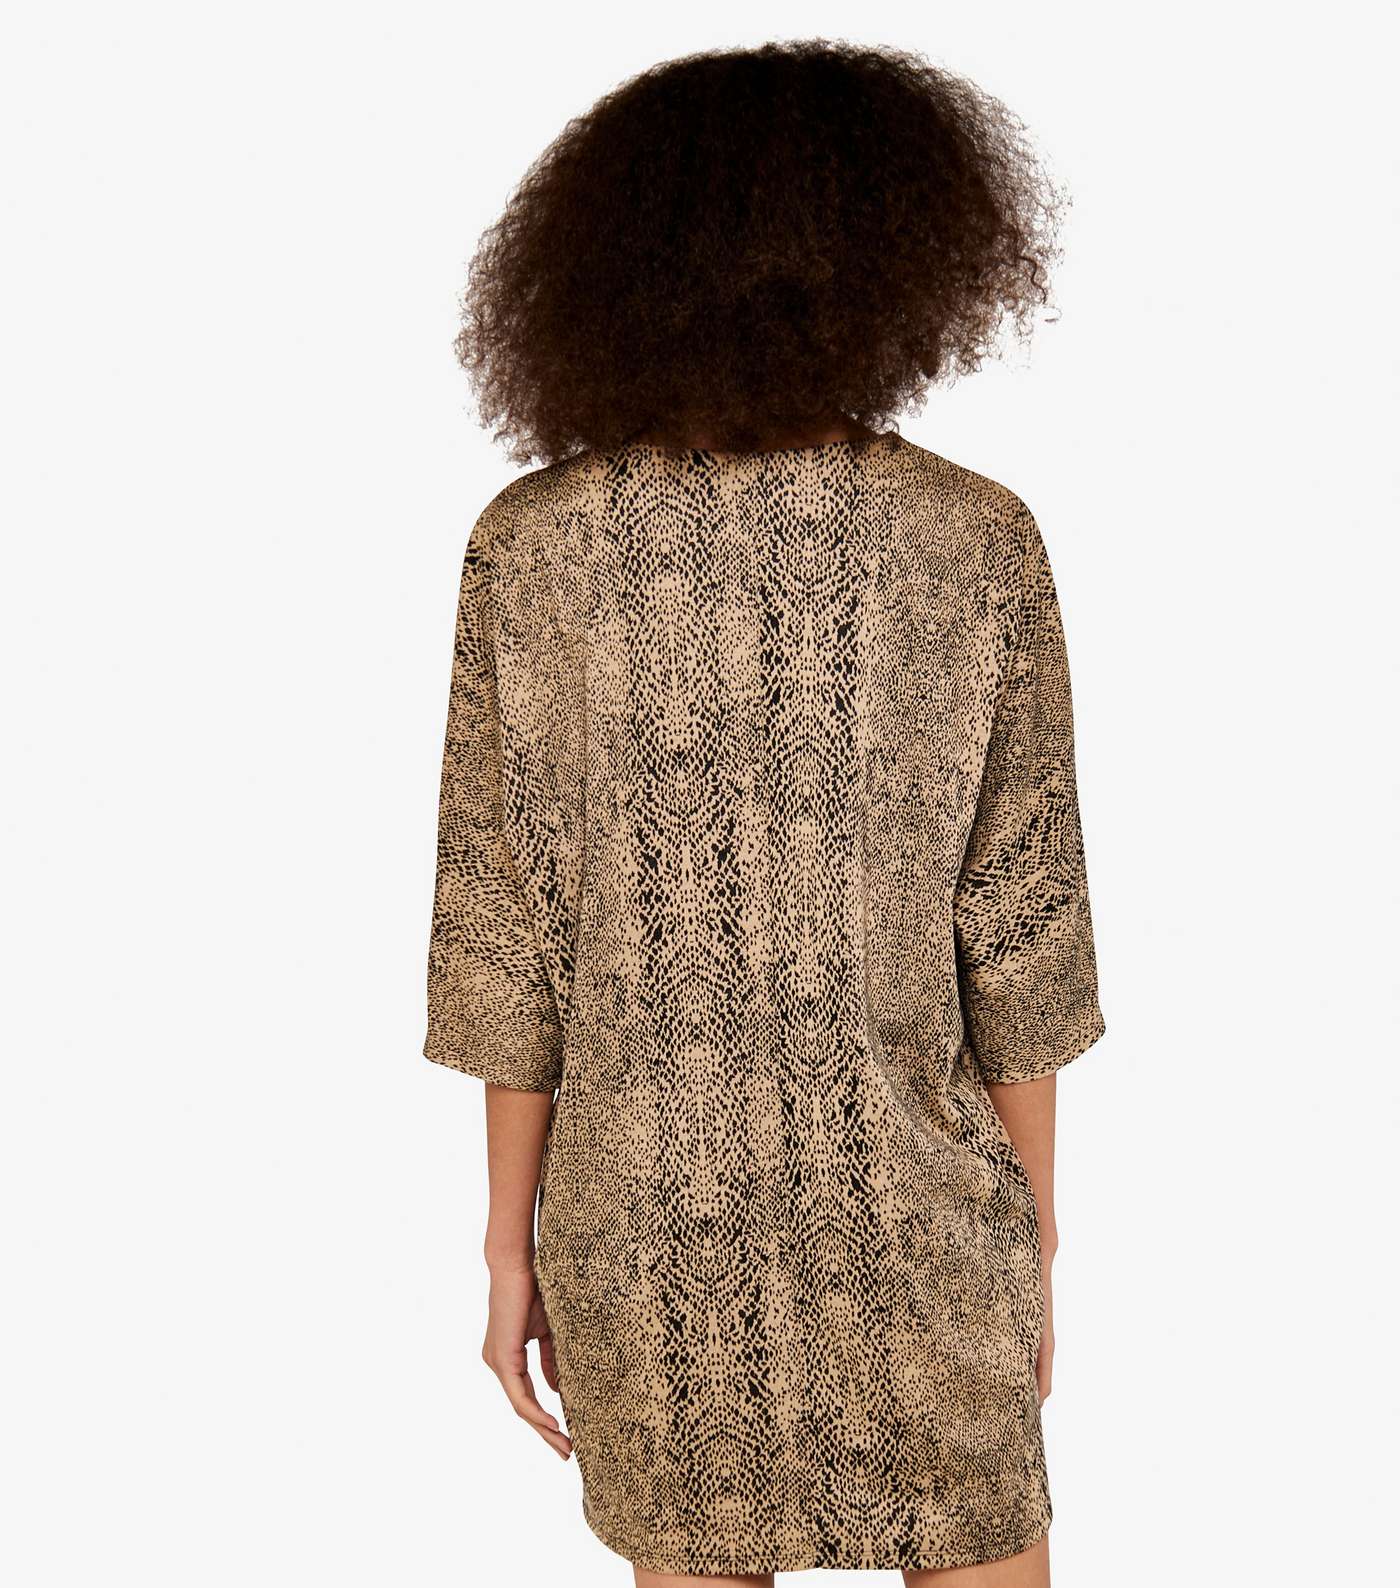 Apricot Leopard Print Cocoon Dress Image 3